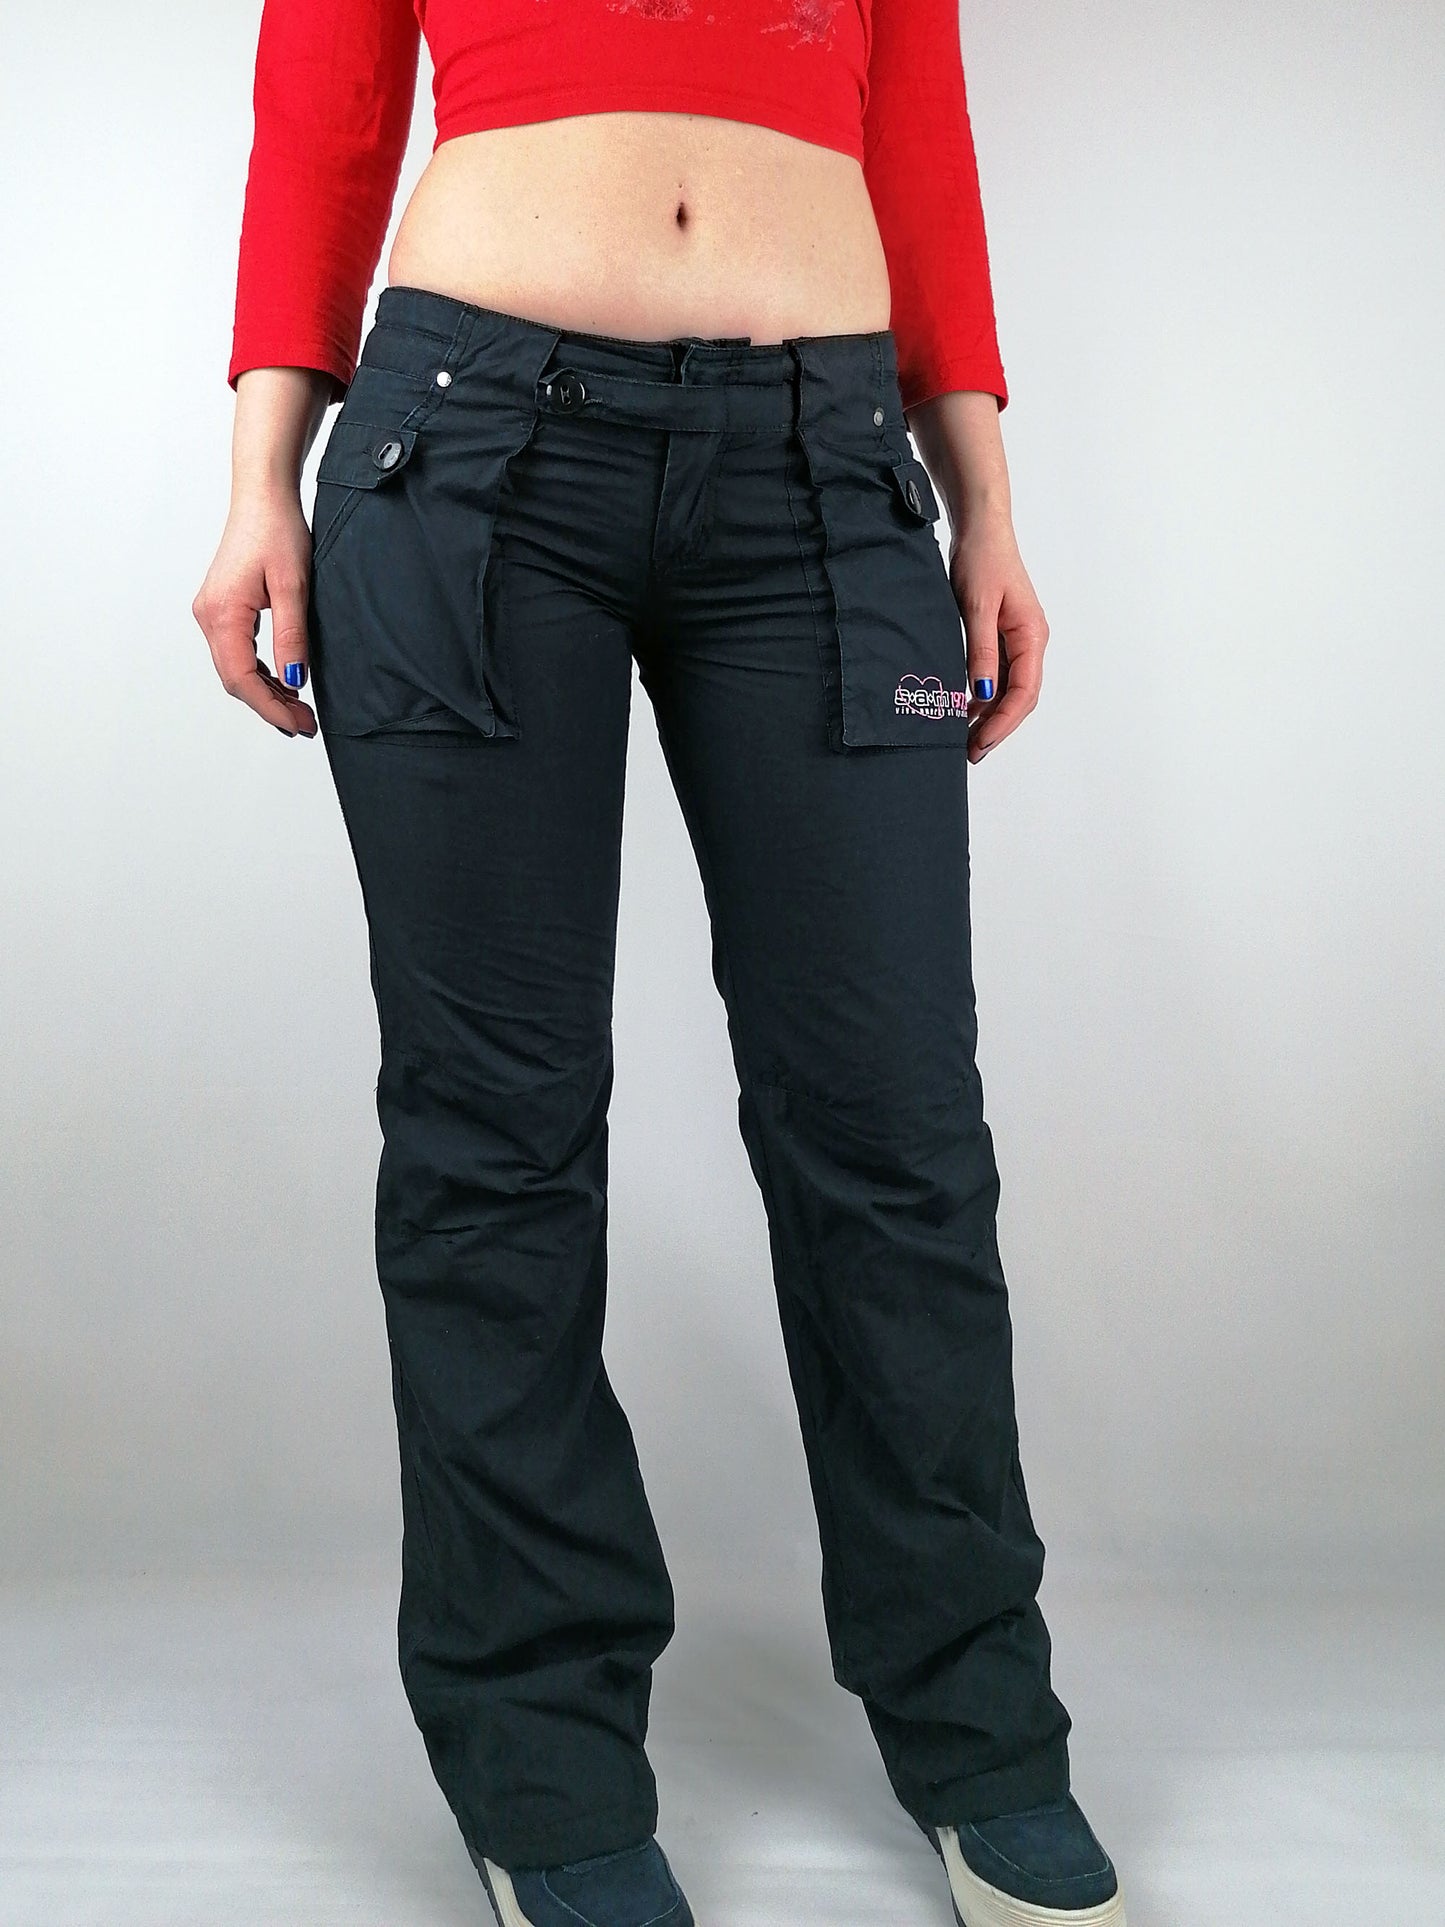 Y2K Soft Shell Low-Waist Flared Black Cargo Pants - size XS